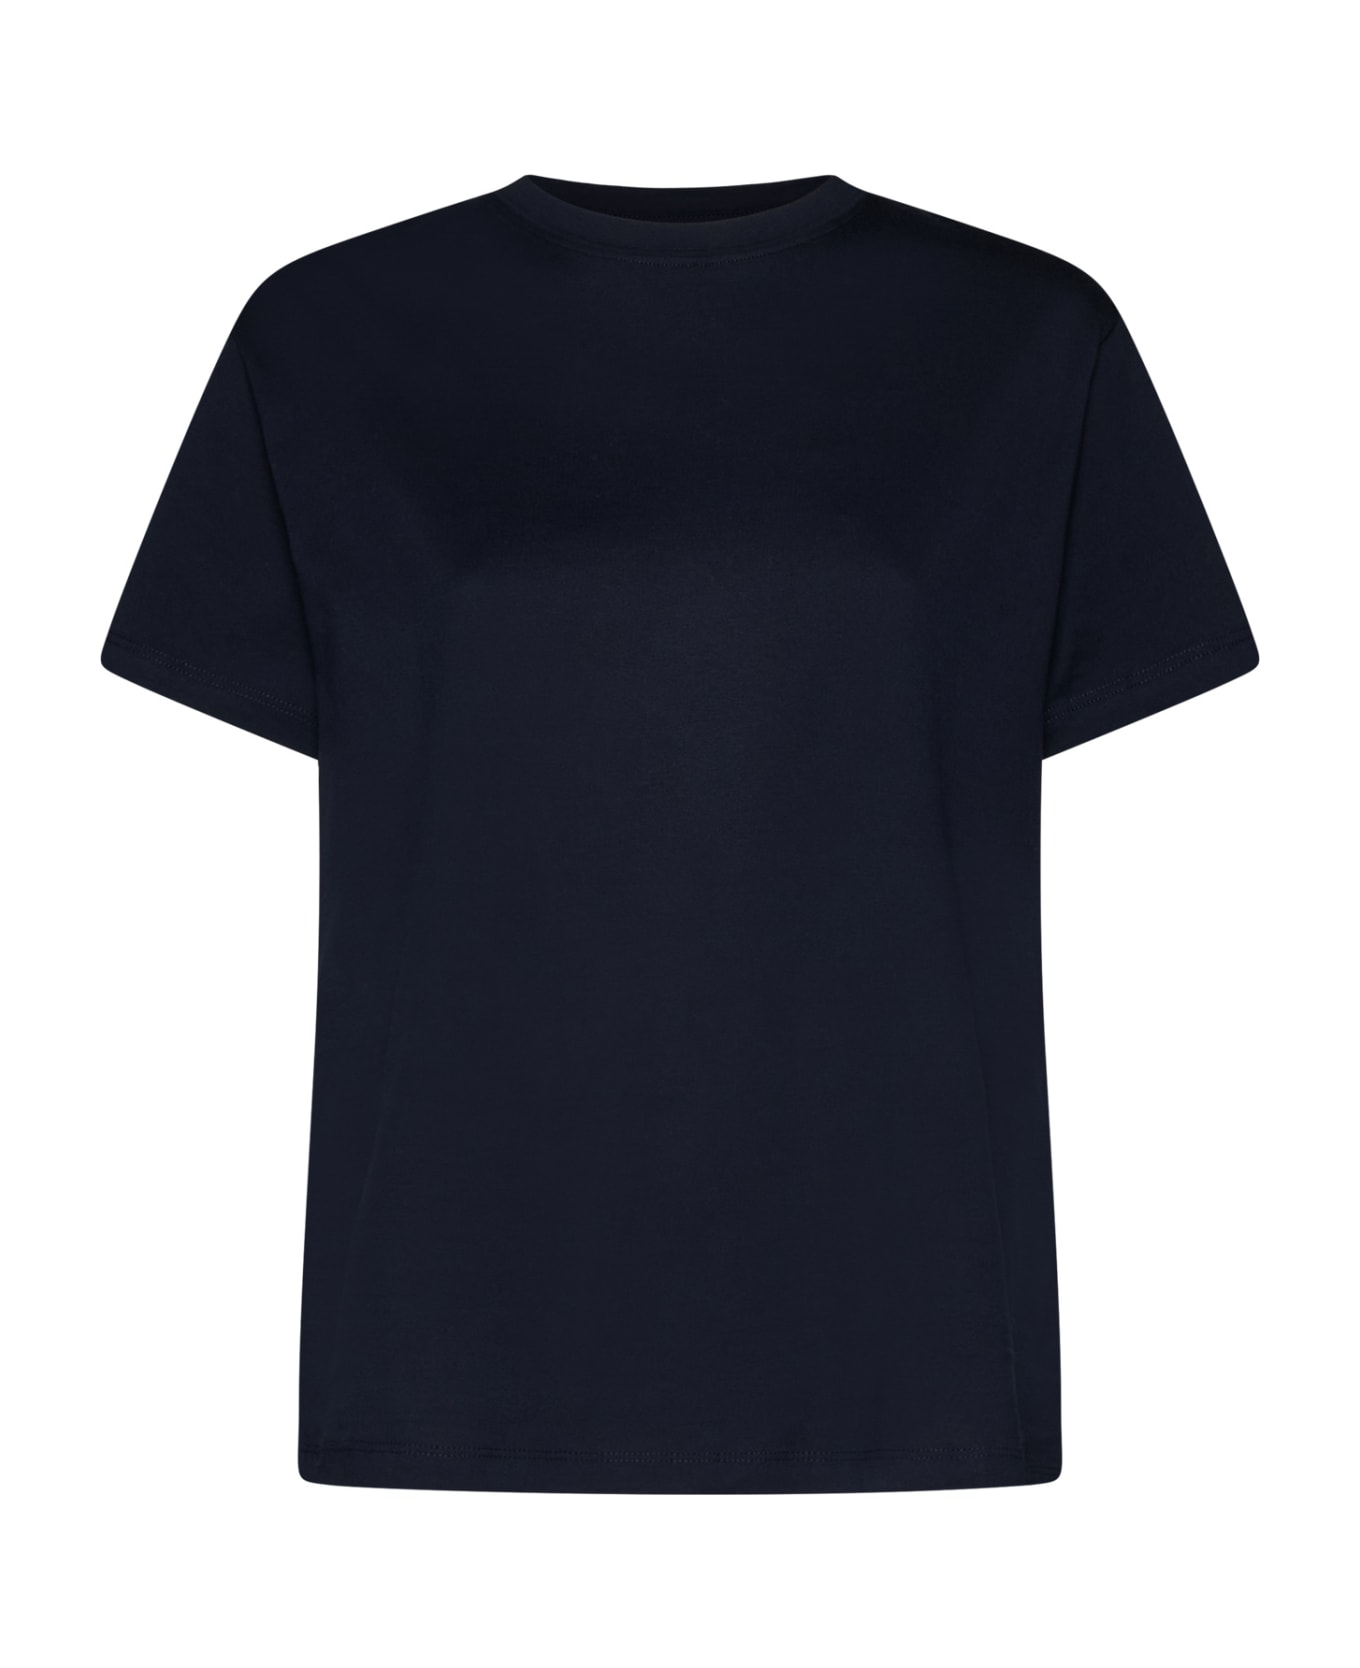 Studio Nicholson T-Shirt - Darkest navy